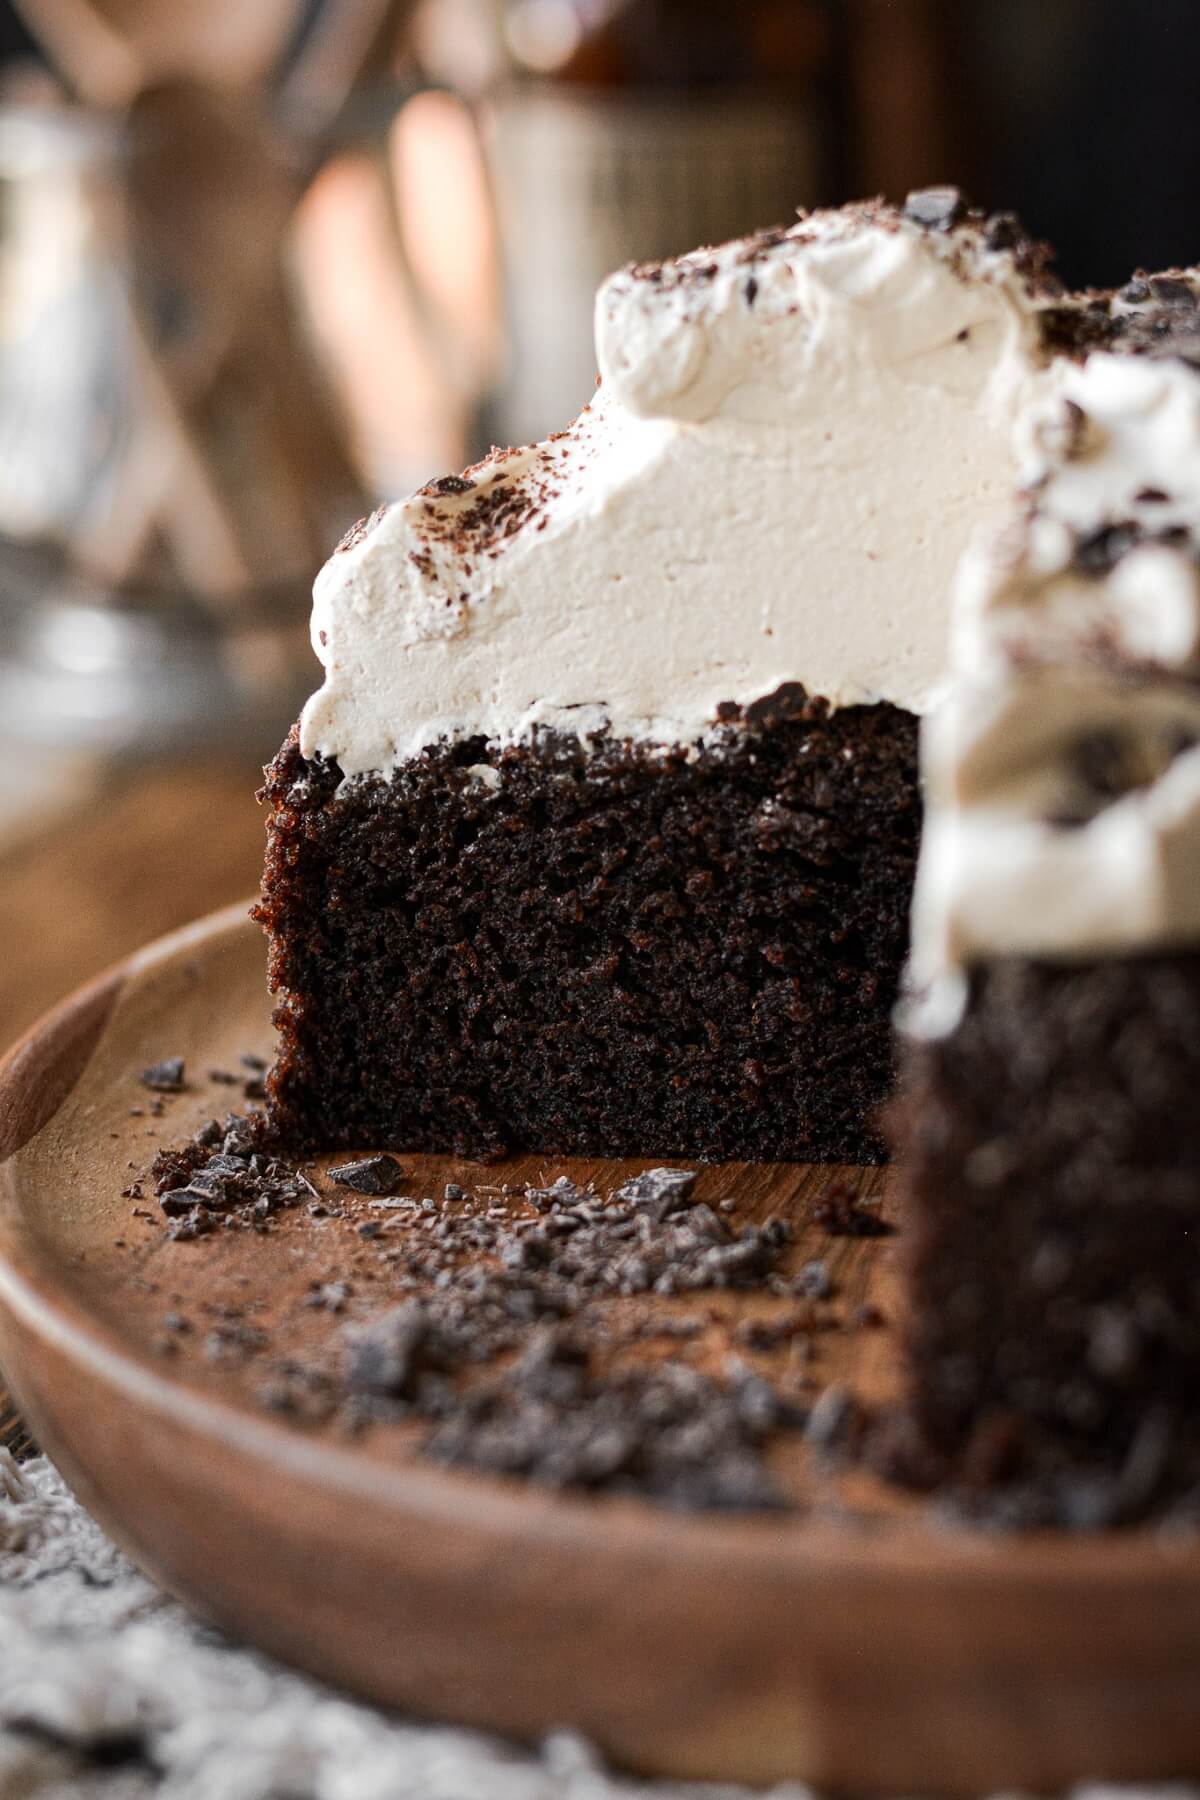 Chocolate mocha cream cake with a slice cut.